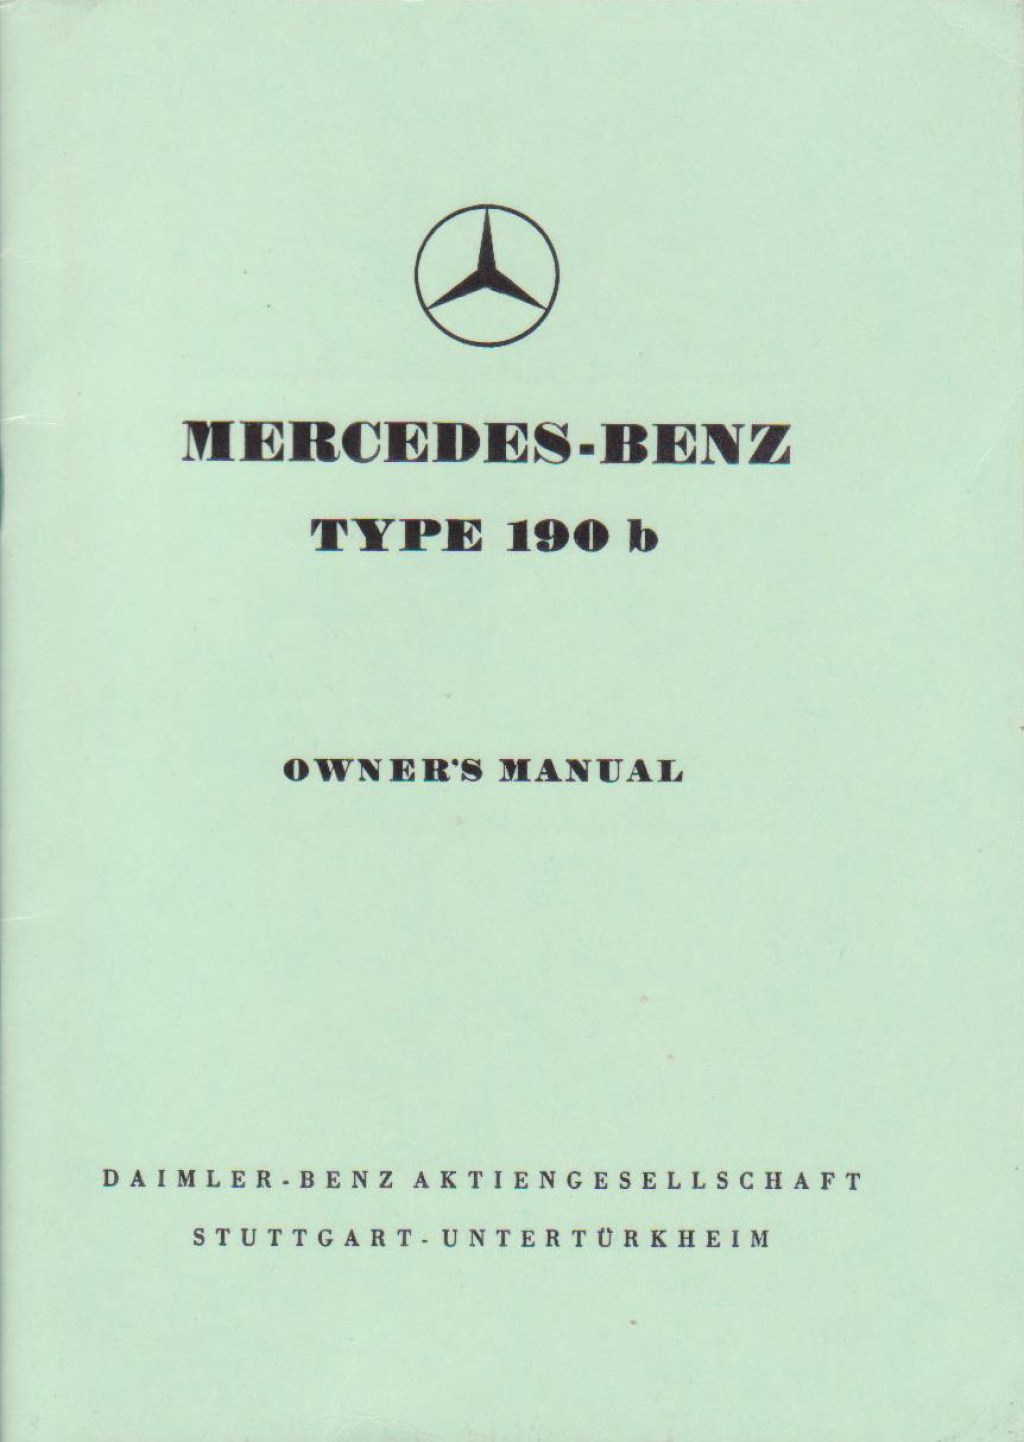 Picture of: Mercedes-Benz Ponton Books / Manuals / Literature / References